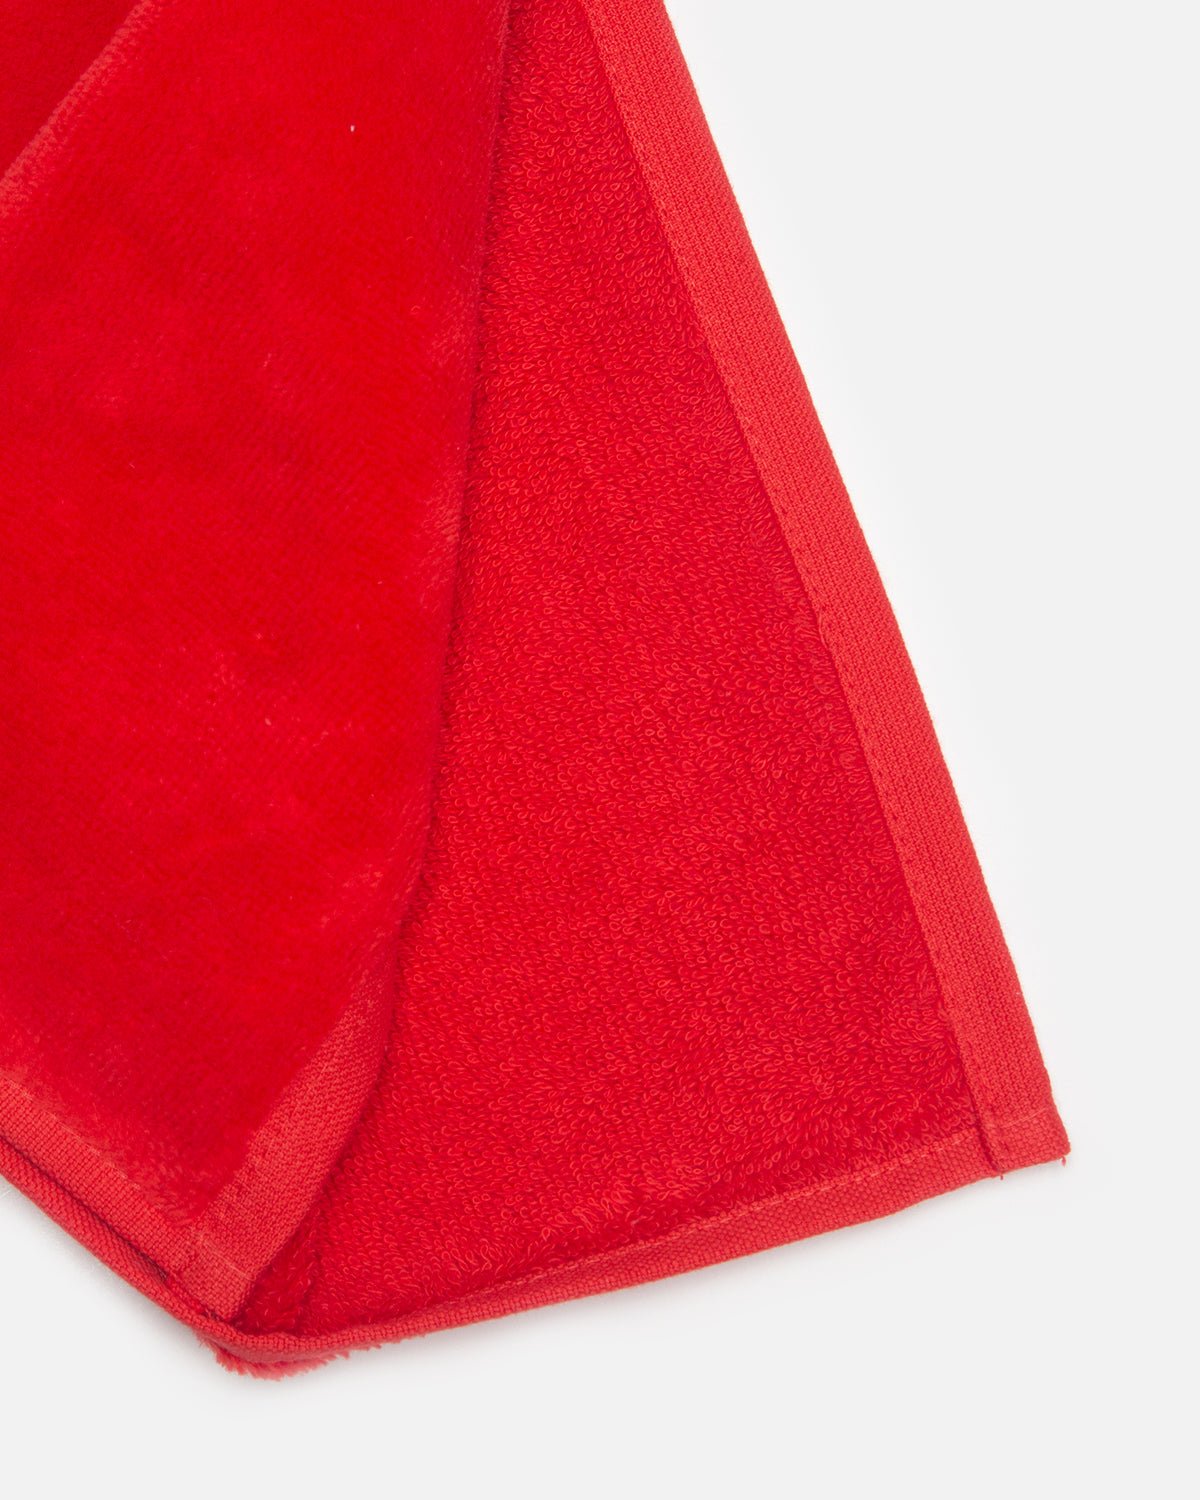 NFFC Red Tri-fold Golf Towel - Nottingham Forest FC